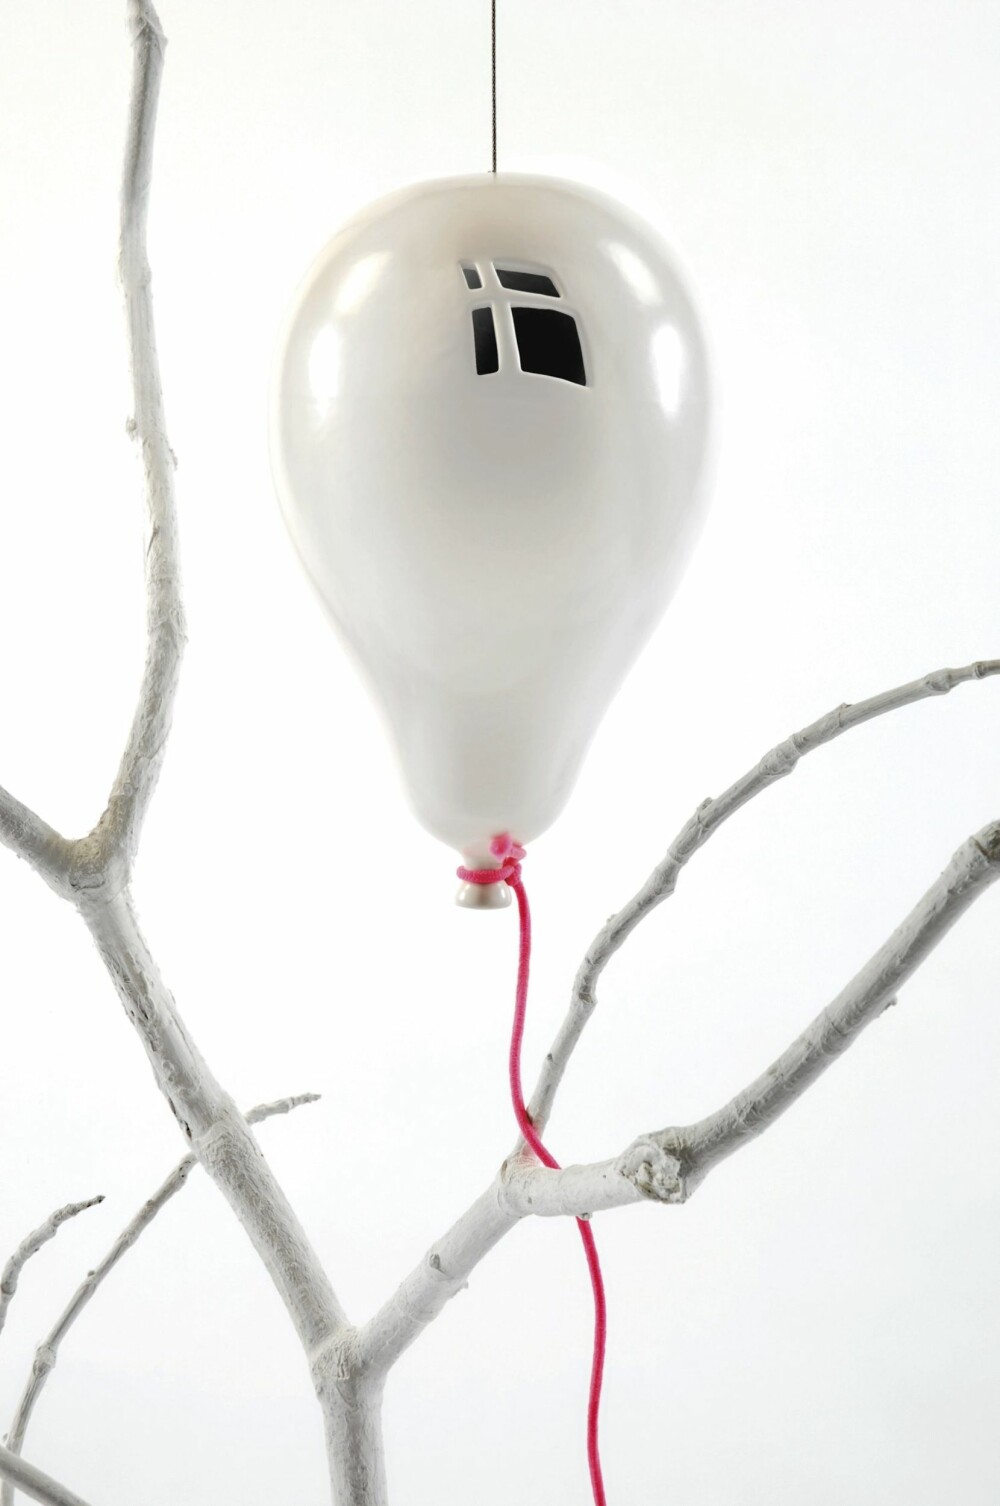 BALLONGLAMPE: Morsom lampe fra Dixit, dixitdesignlab.com